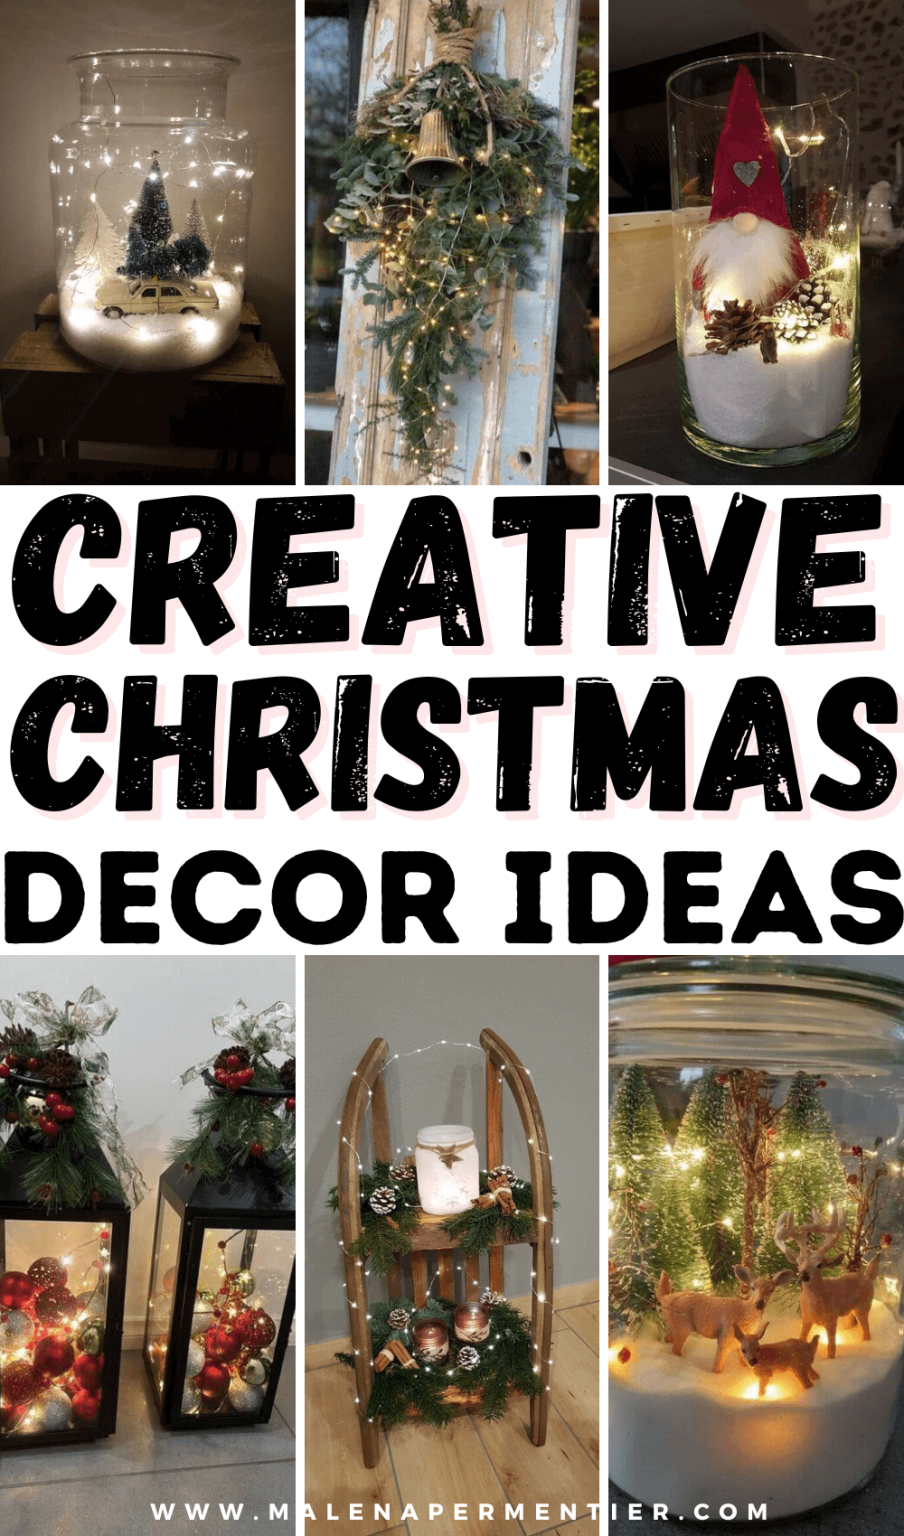 26 Creative Christmas Decor Ideas For The Home (You Can Recreate!)